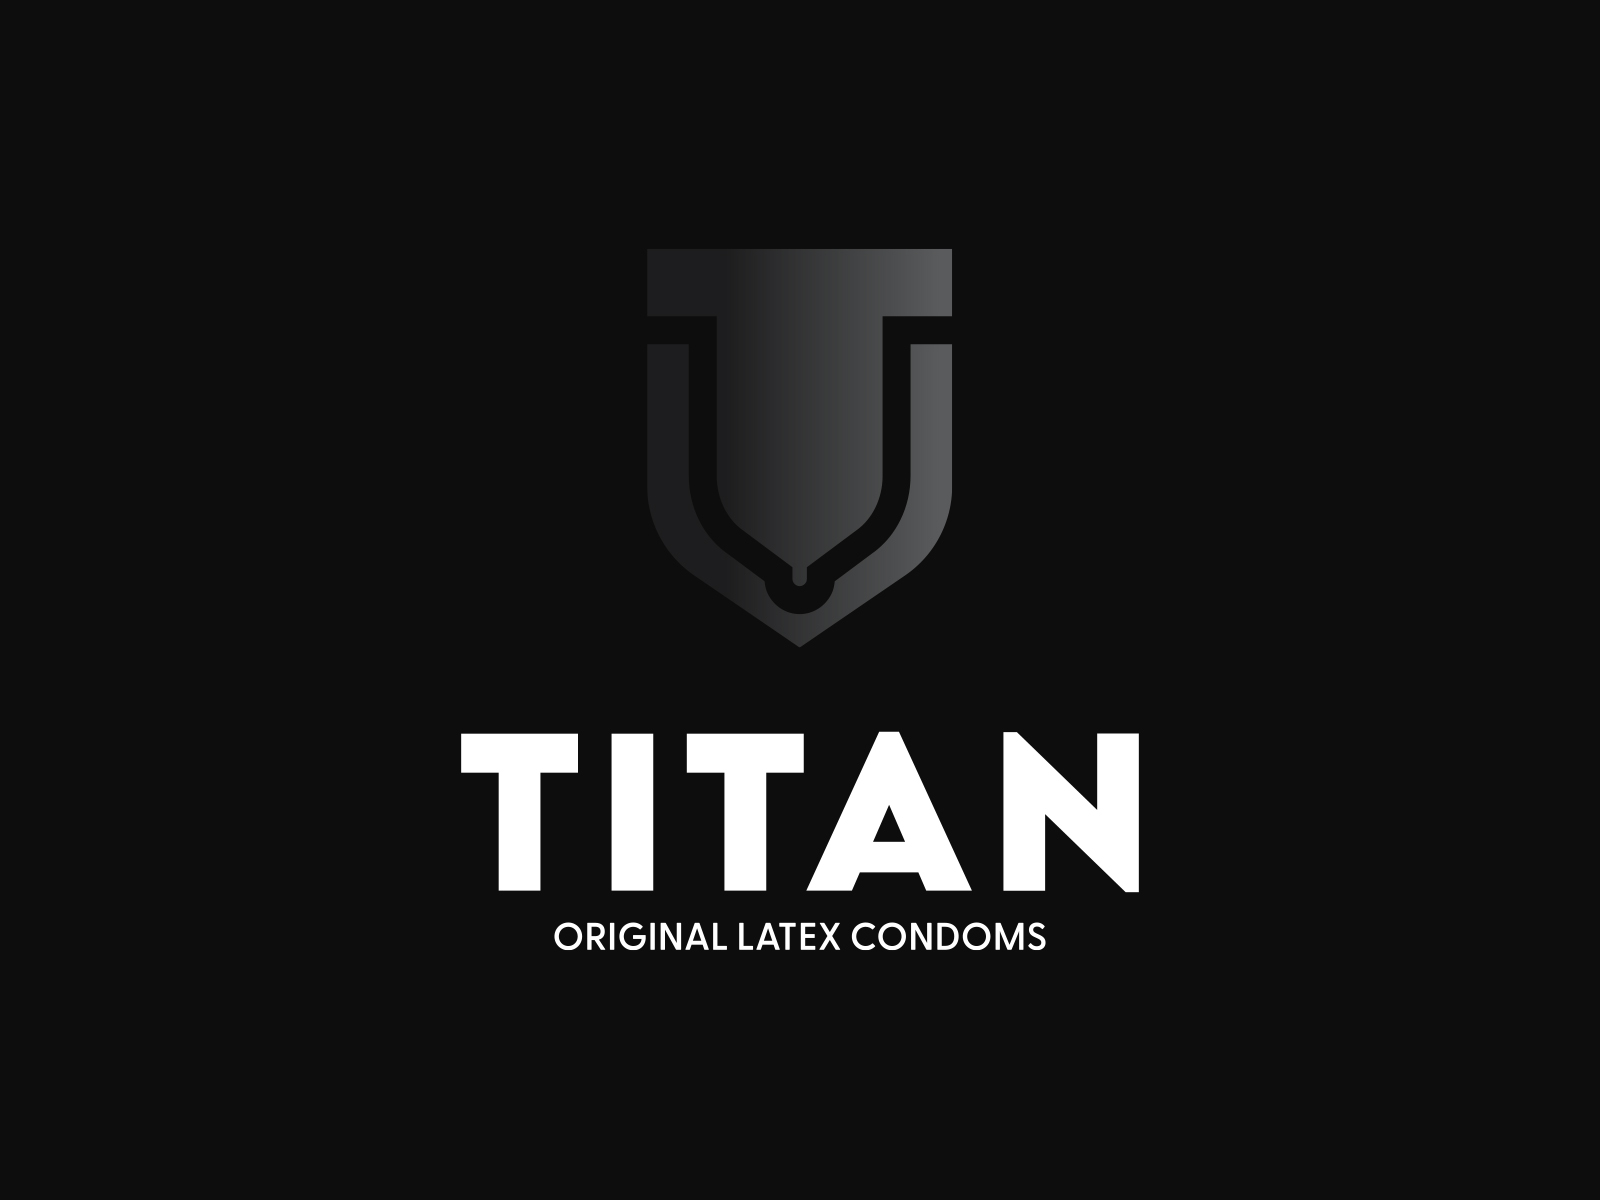 Buy Titan Helios e-voucher Rs.5000 - Redeem Credit card points | SBI Card